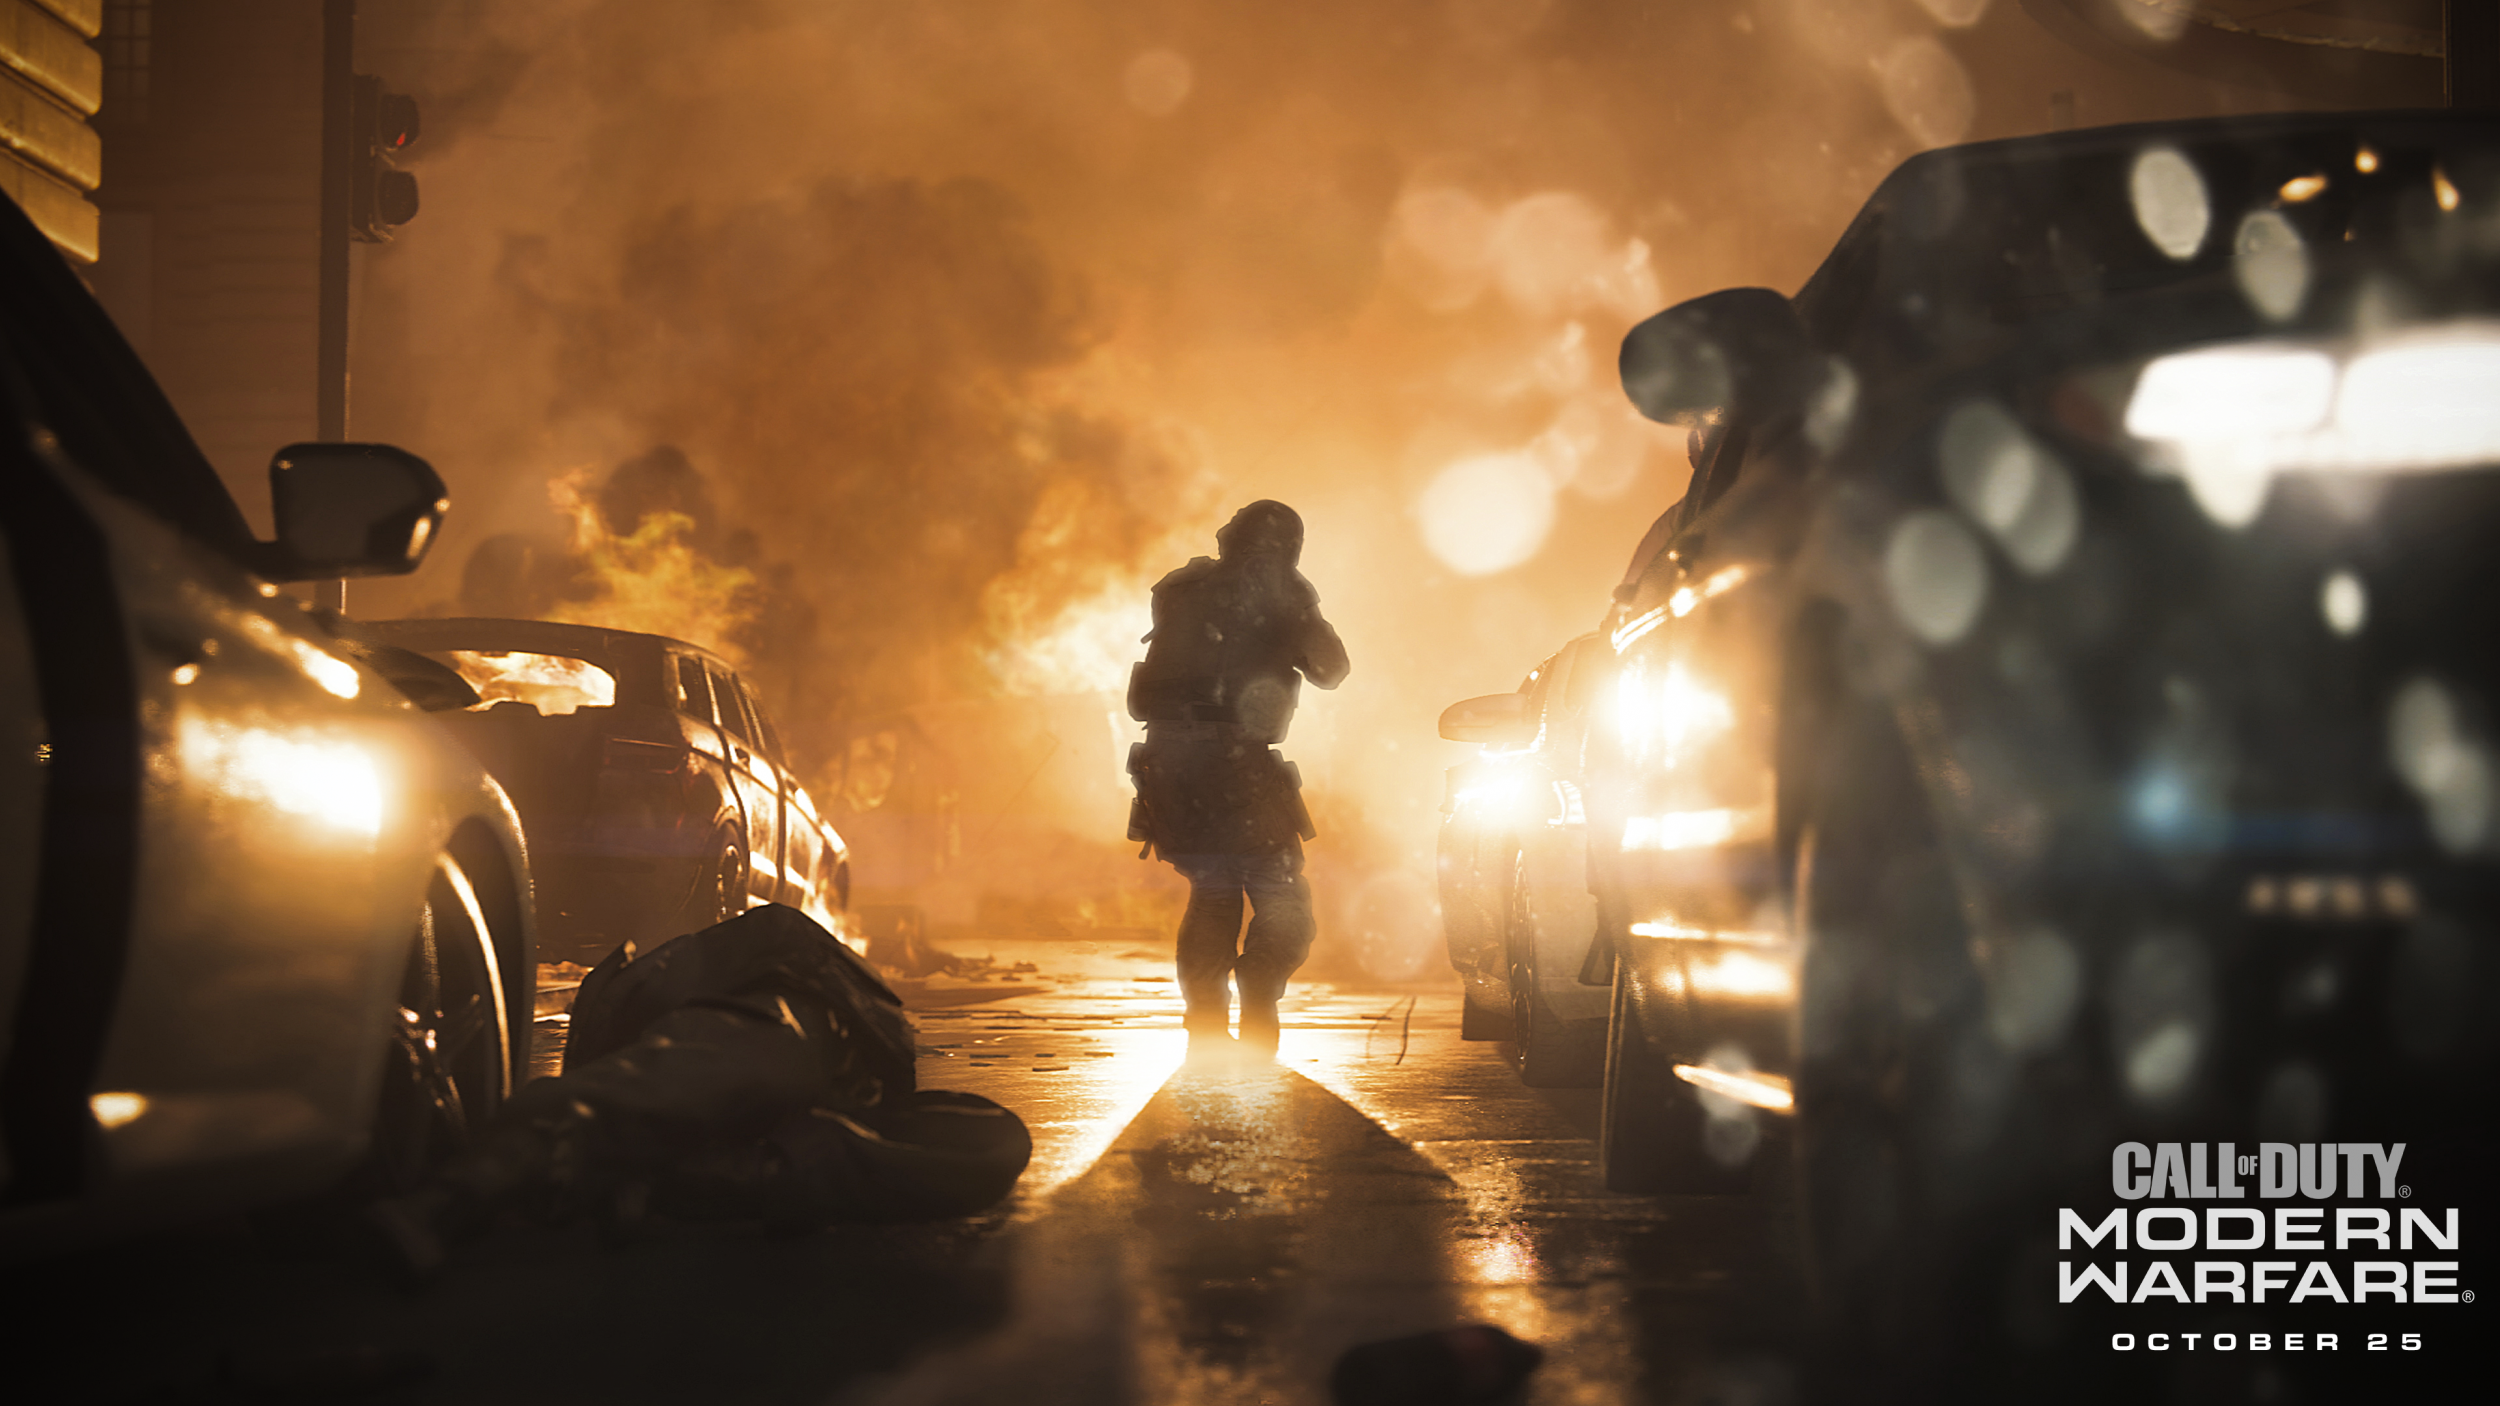 Call of Duty: Modern Warfare 2019 special edition preorder